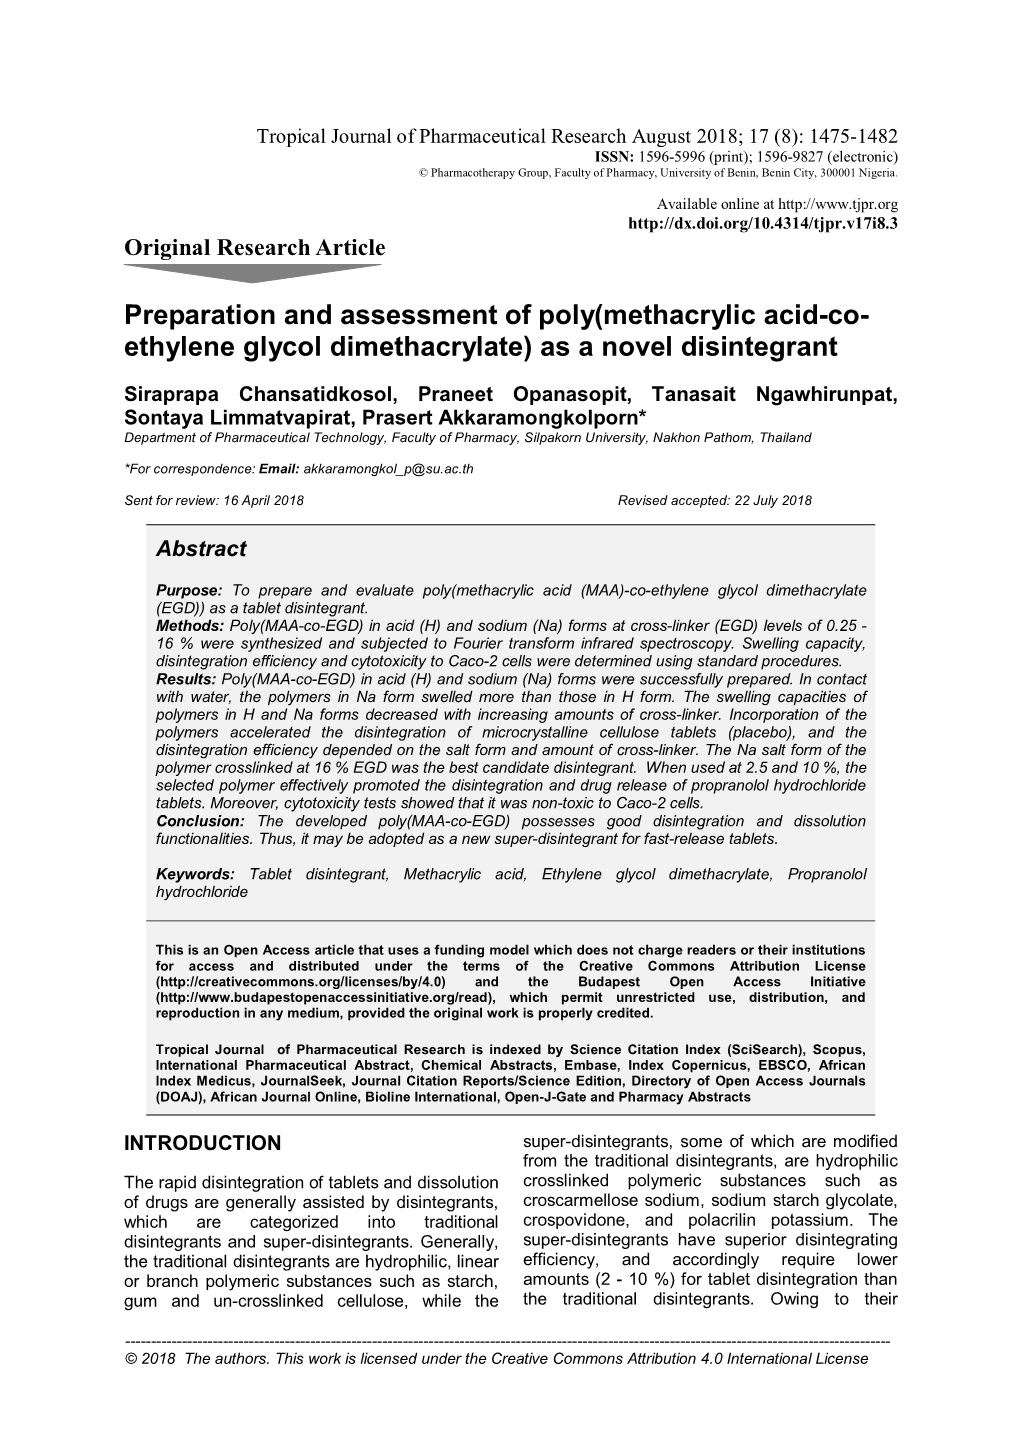 Preparation and Assessment of Poly(Methacrylic Acid-Co- Ethylene Glycol Dimethacrylate) As a Novel Disintegrant